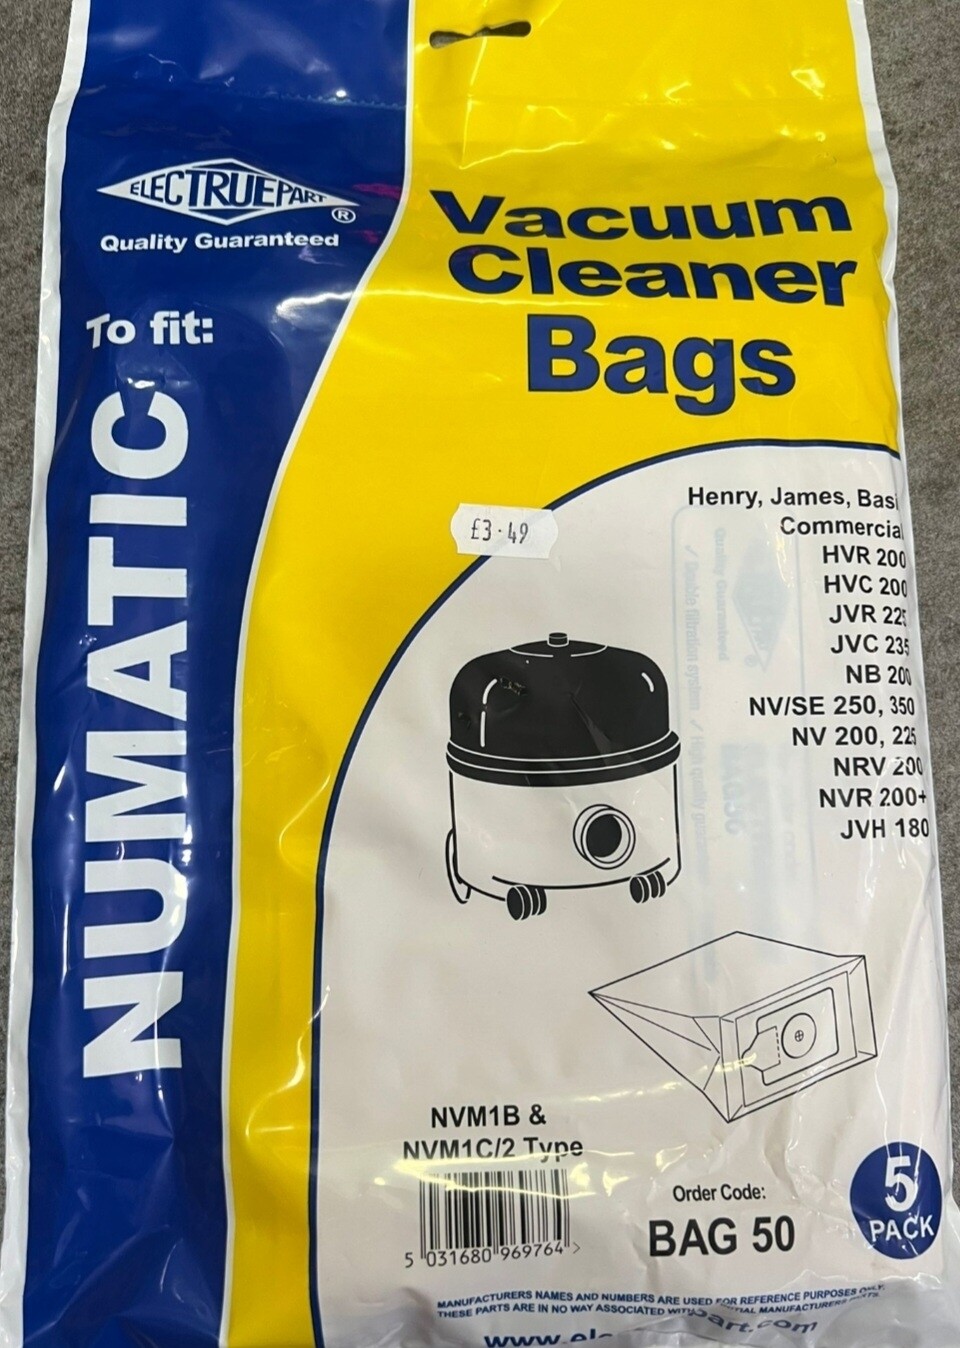 Vacuum cleaner bags